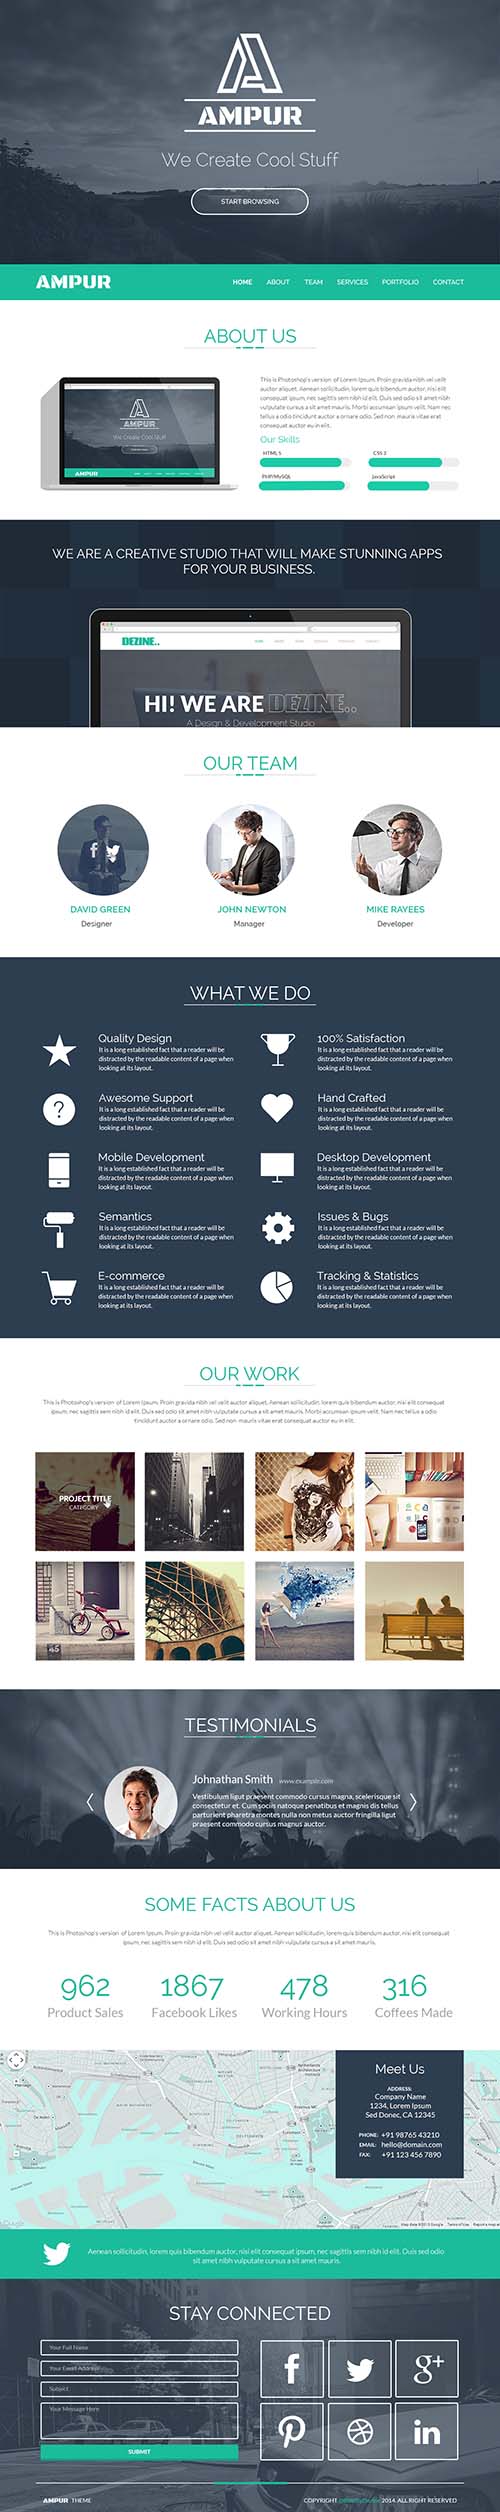 PSD Web Template - Ampur - A Creative Agency Theme